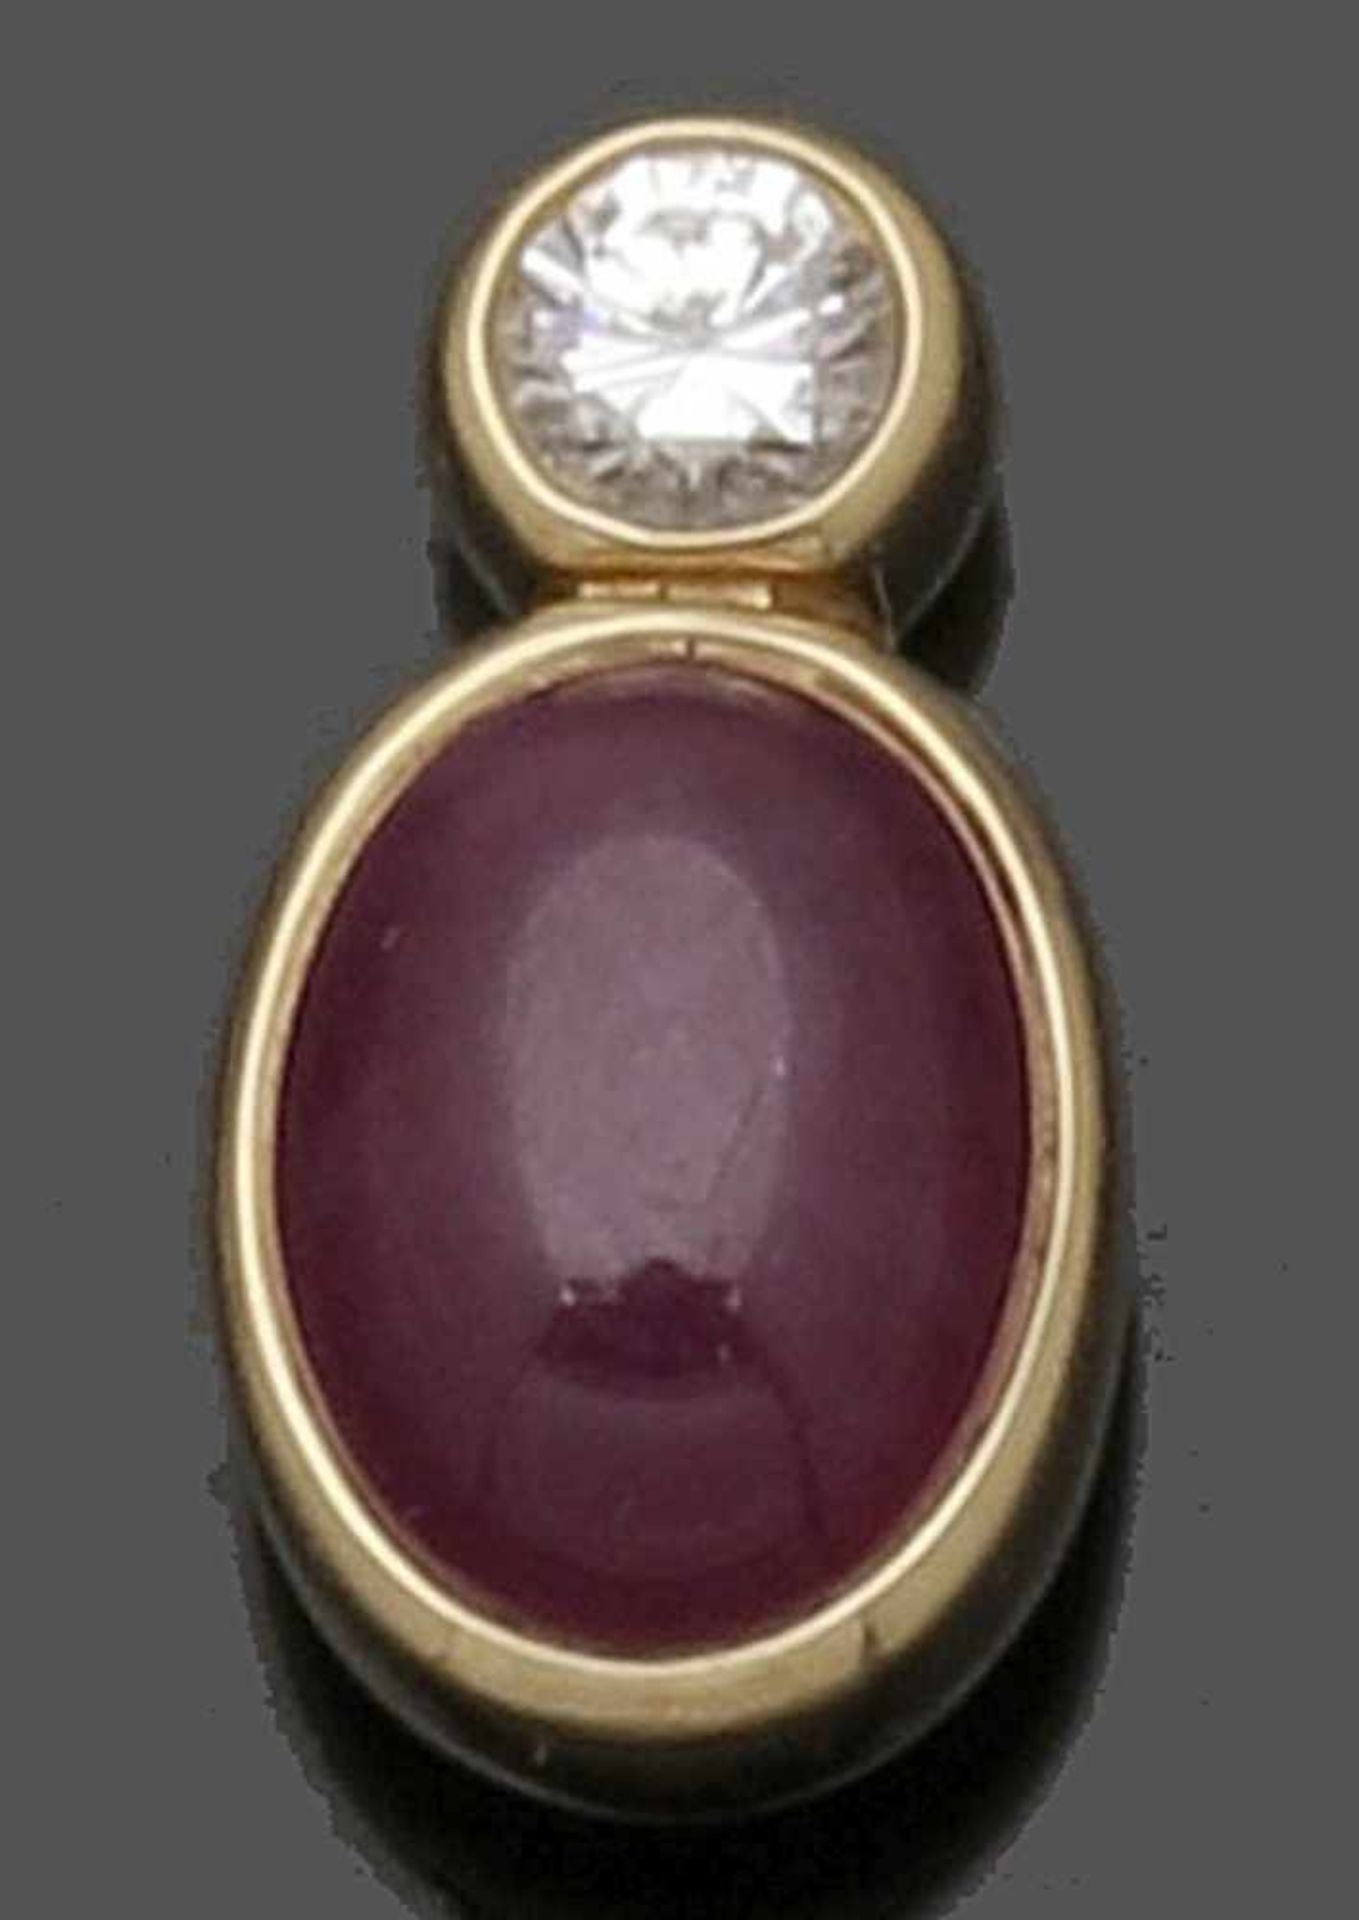 Pin mit einem Rubincabochon und Brillant A ruby and diamond pin 585er GG, gestemp. 1 ovaler